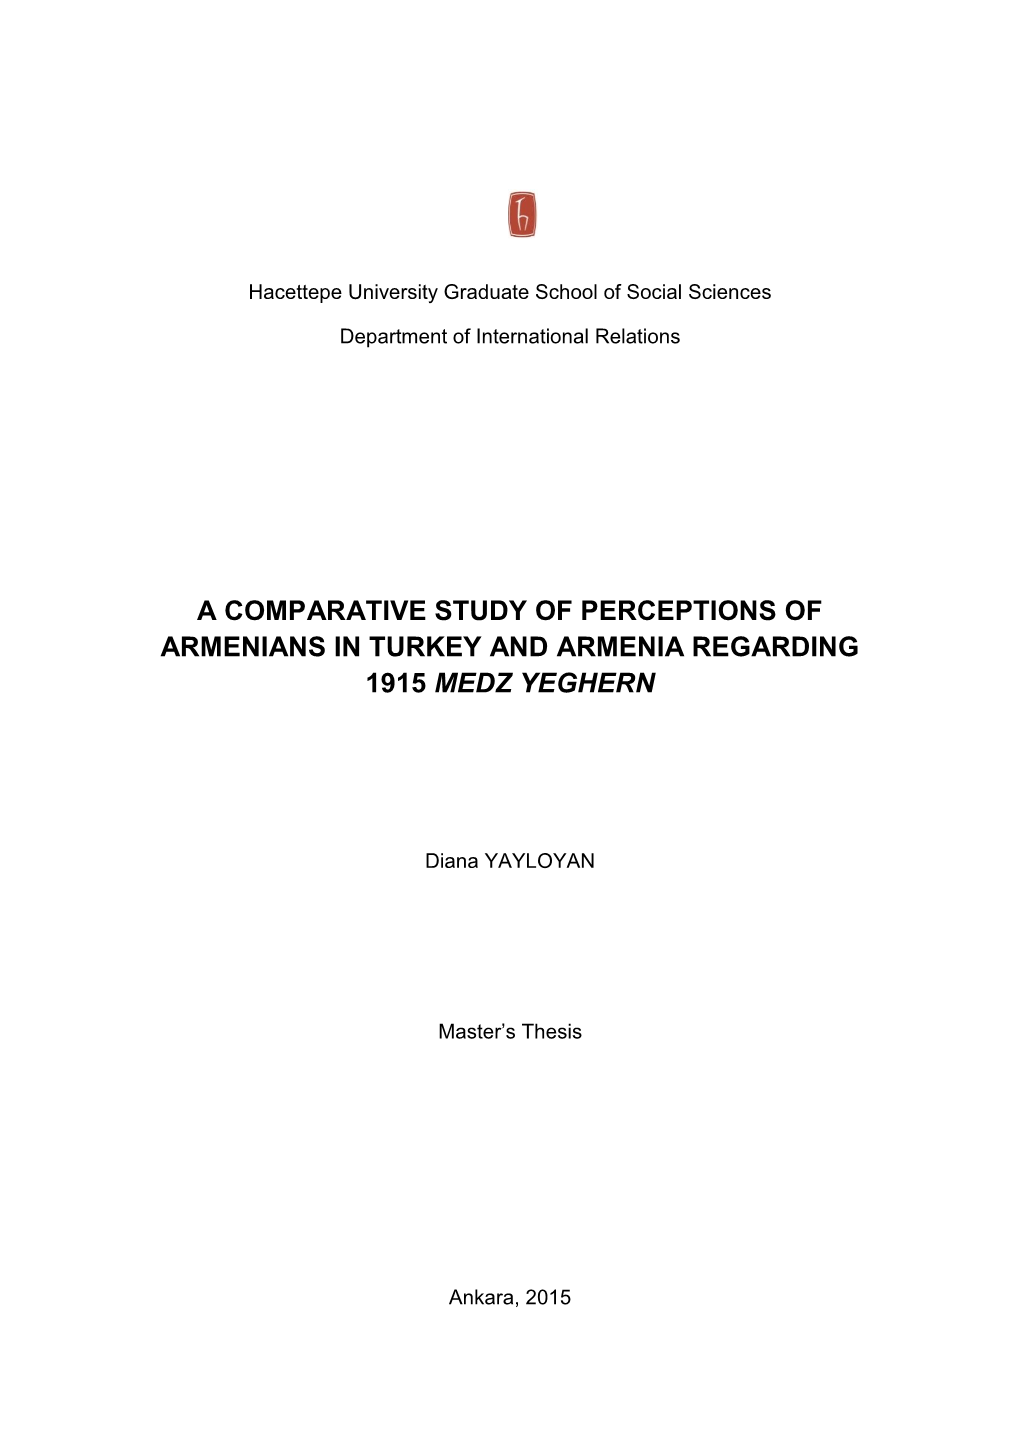 A Comparatıve Study of Perceptıons of Armenıans in Turkey and Armenıa